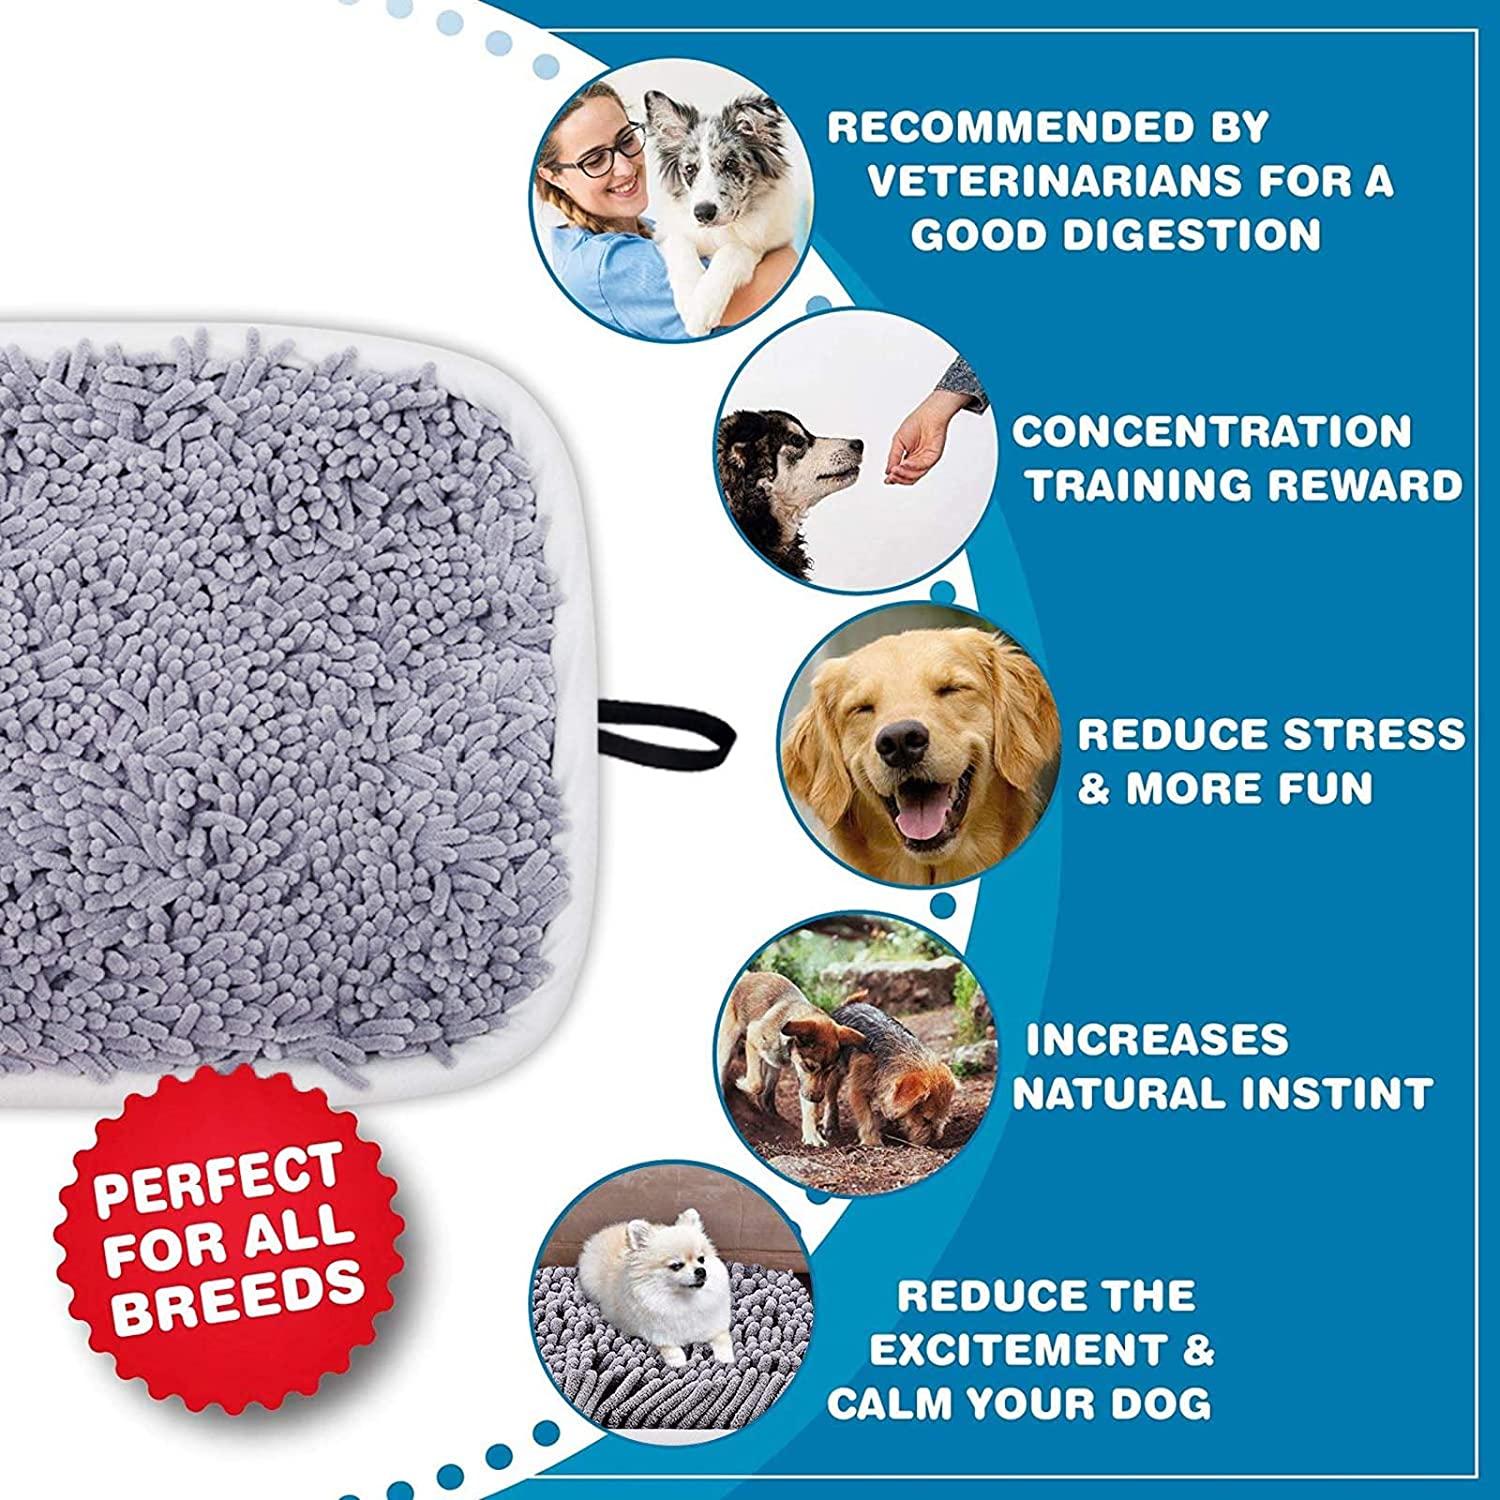 Snuffle Mat Silicone Foraging Skills Training Dog Feeding Mat